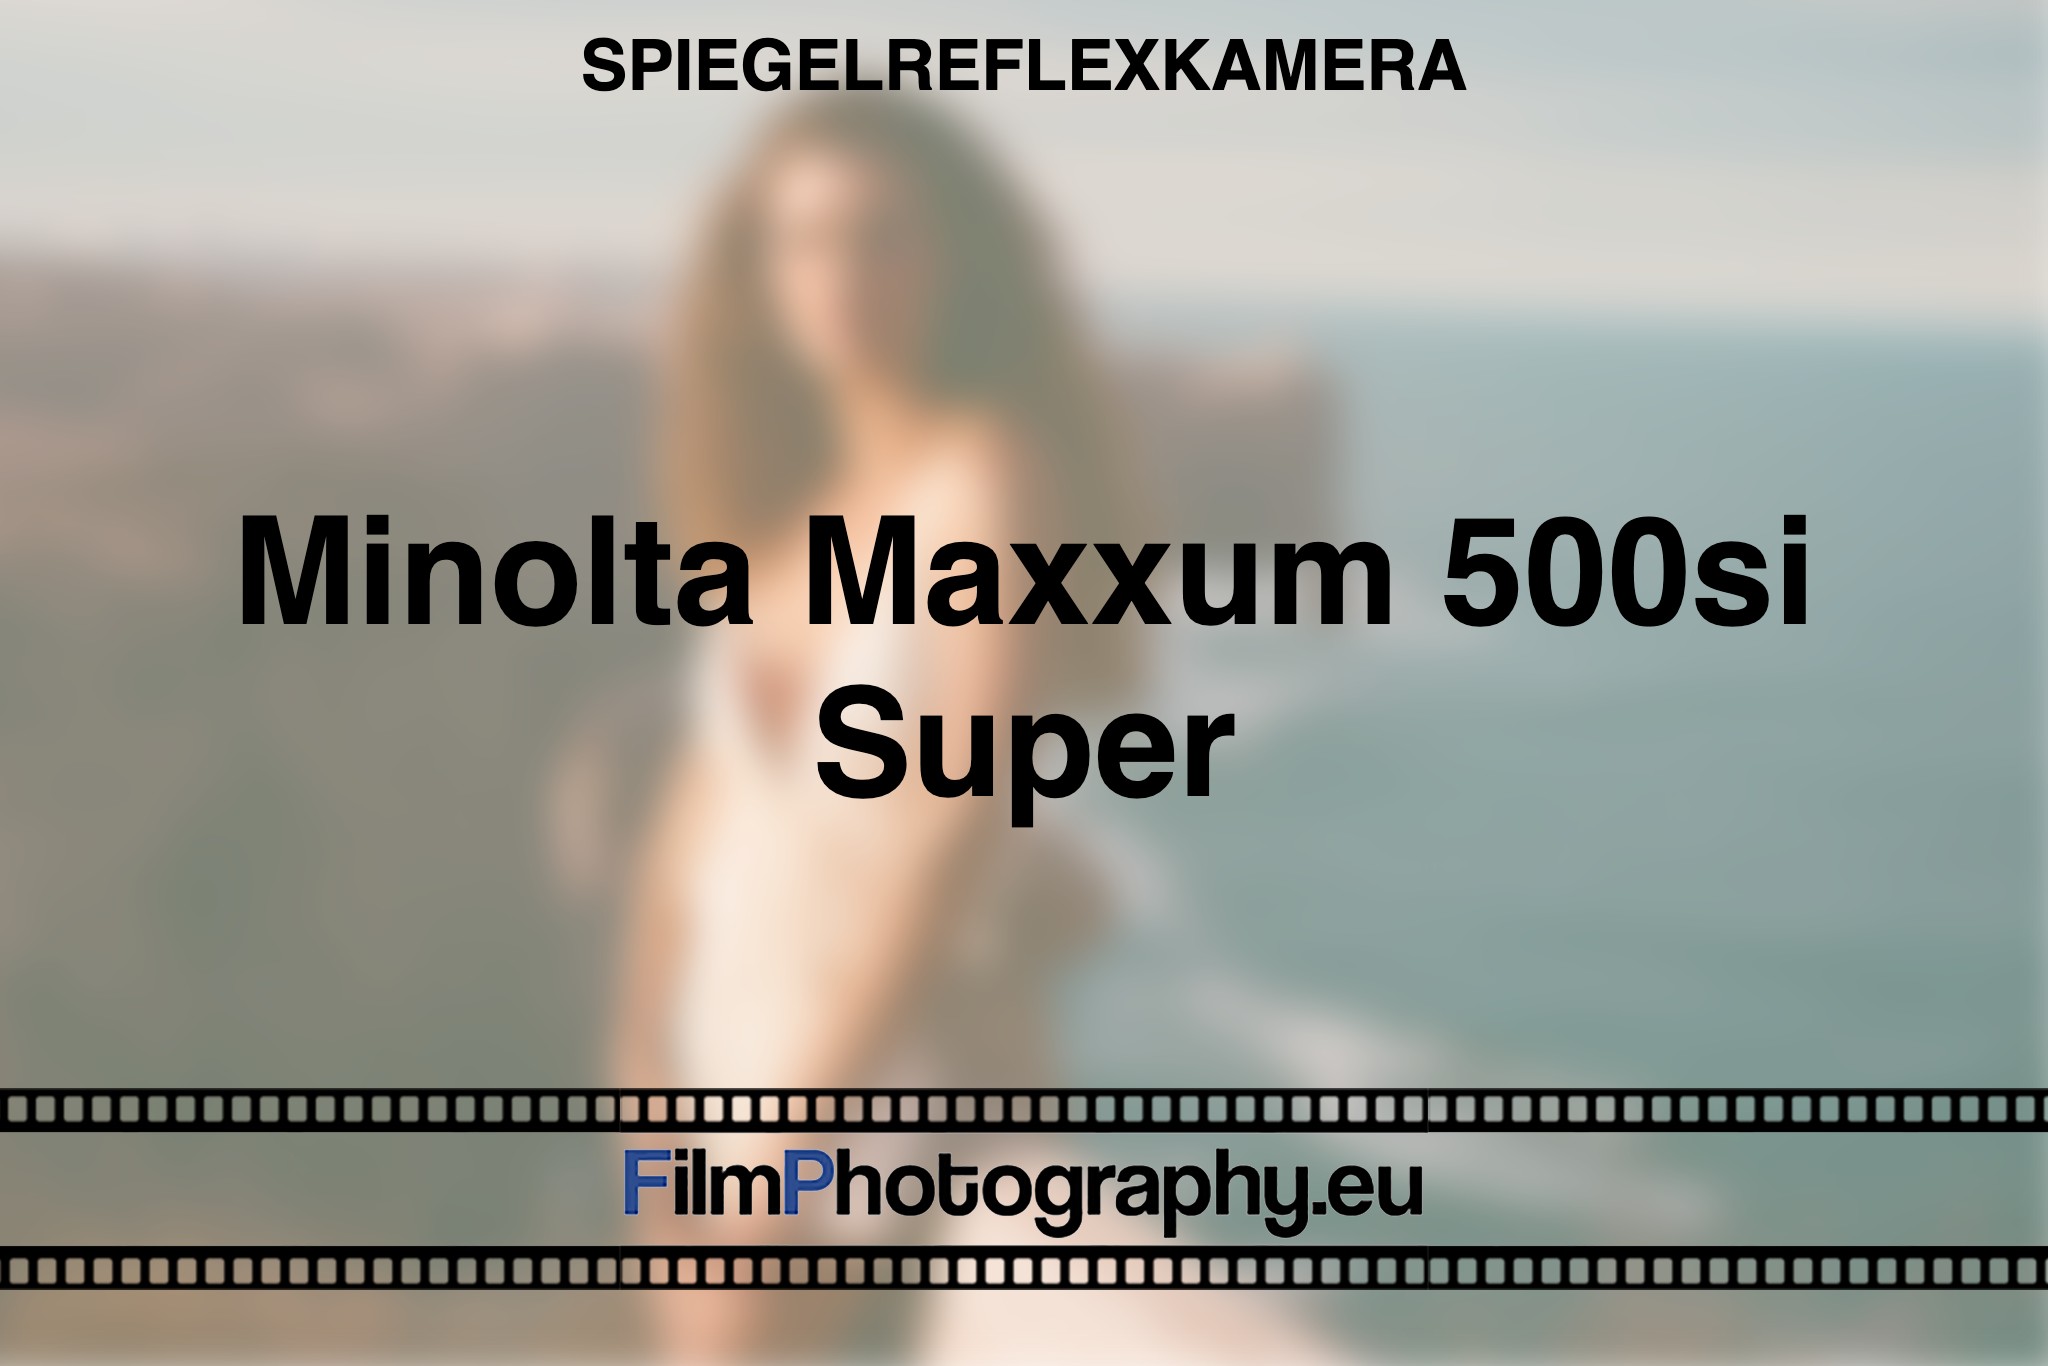 minolta-maxxum-500si-super-spiegelreflexkamera-bnv